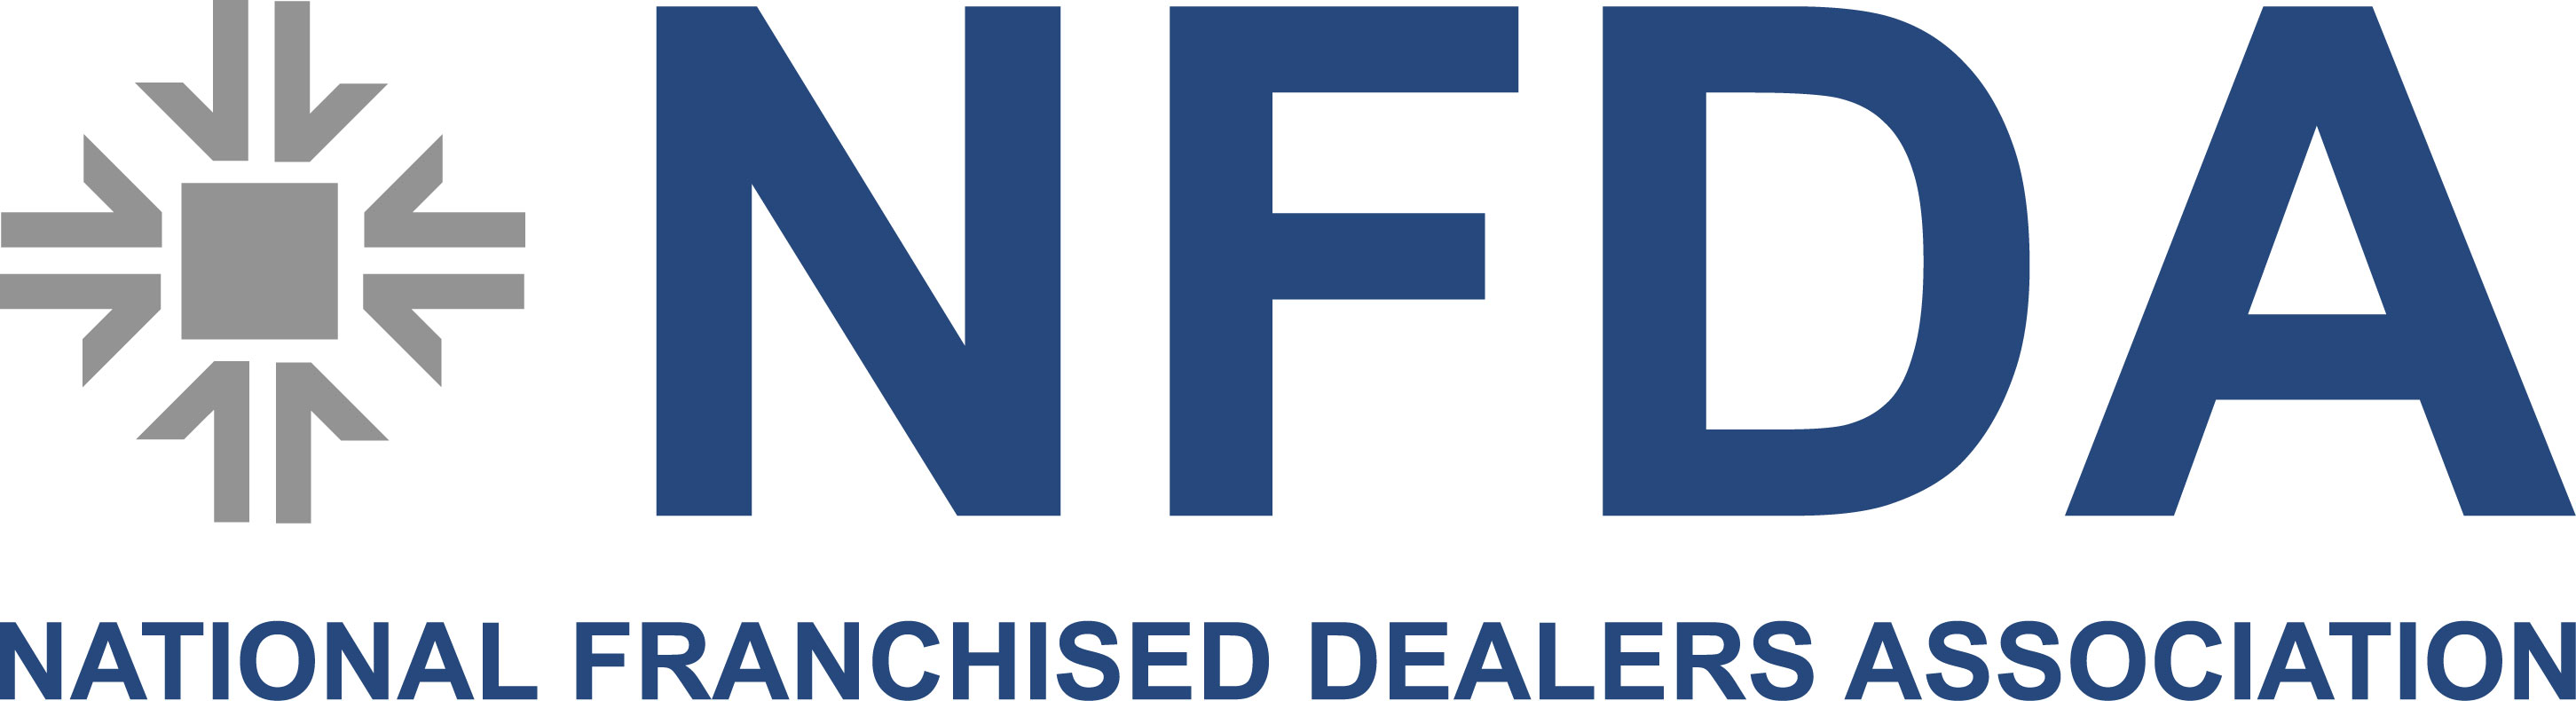 NFDA, colour logo